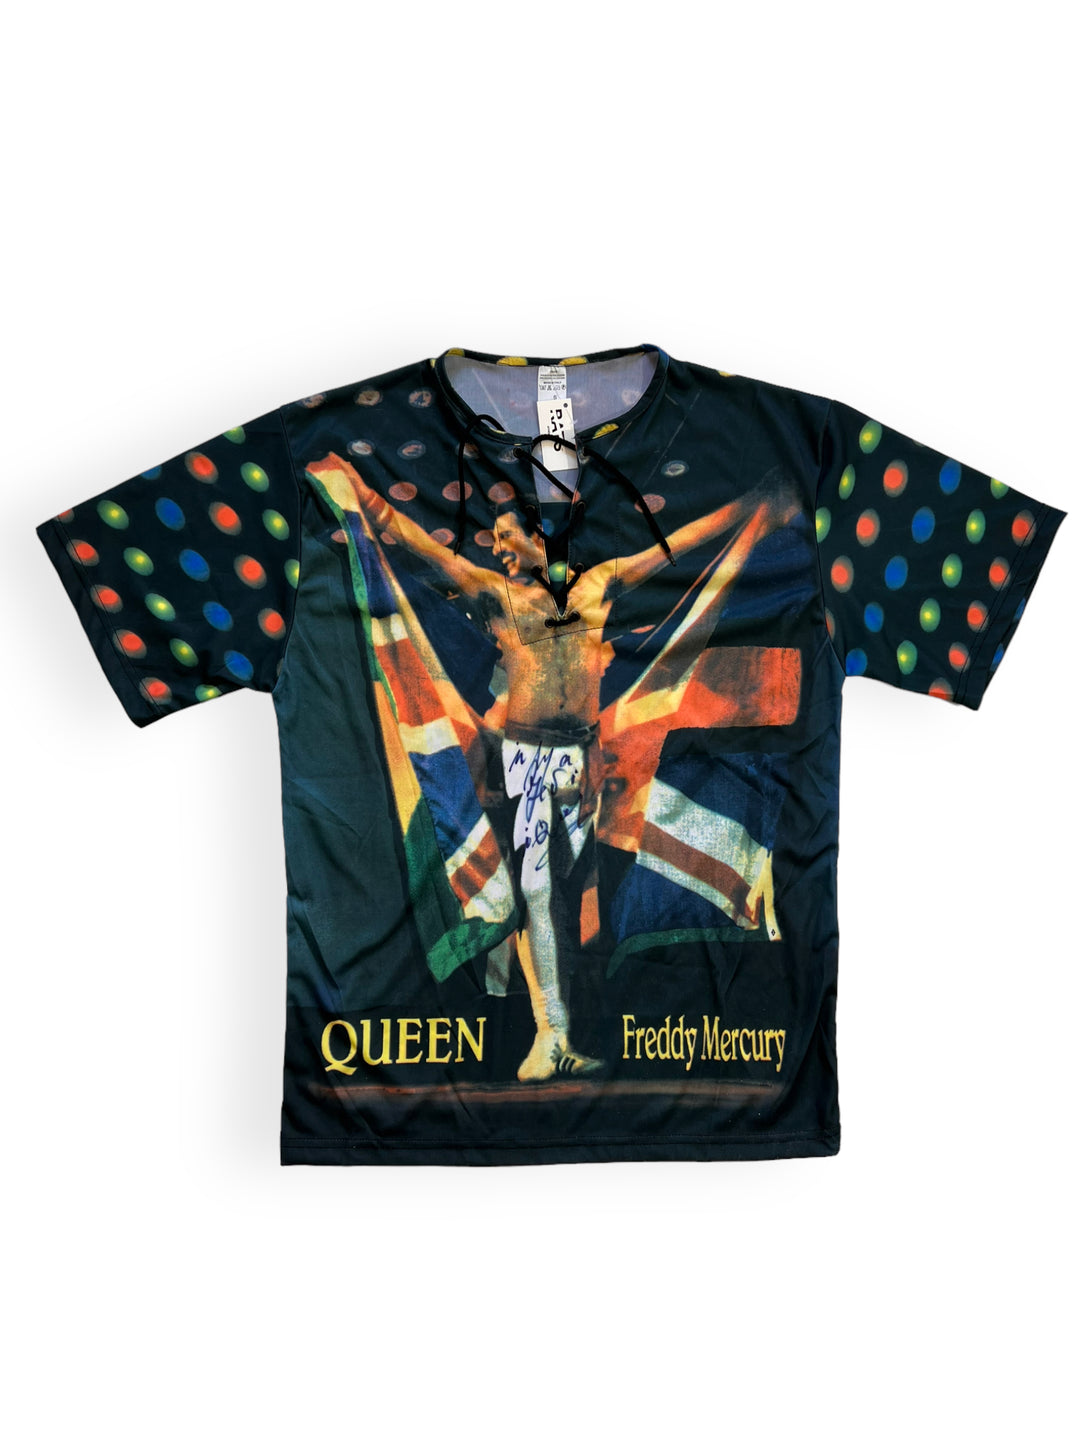 Vintage Freddie Mercury Queen Concert T-Shirt Men’s Small